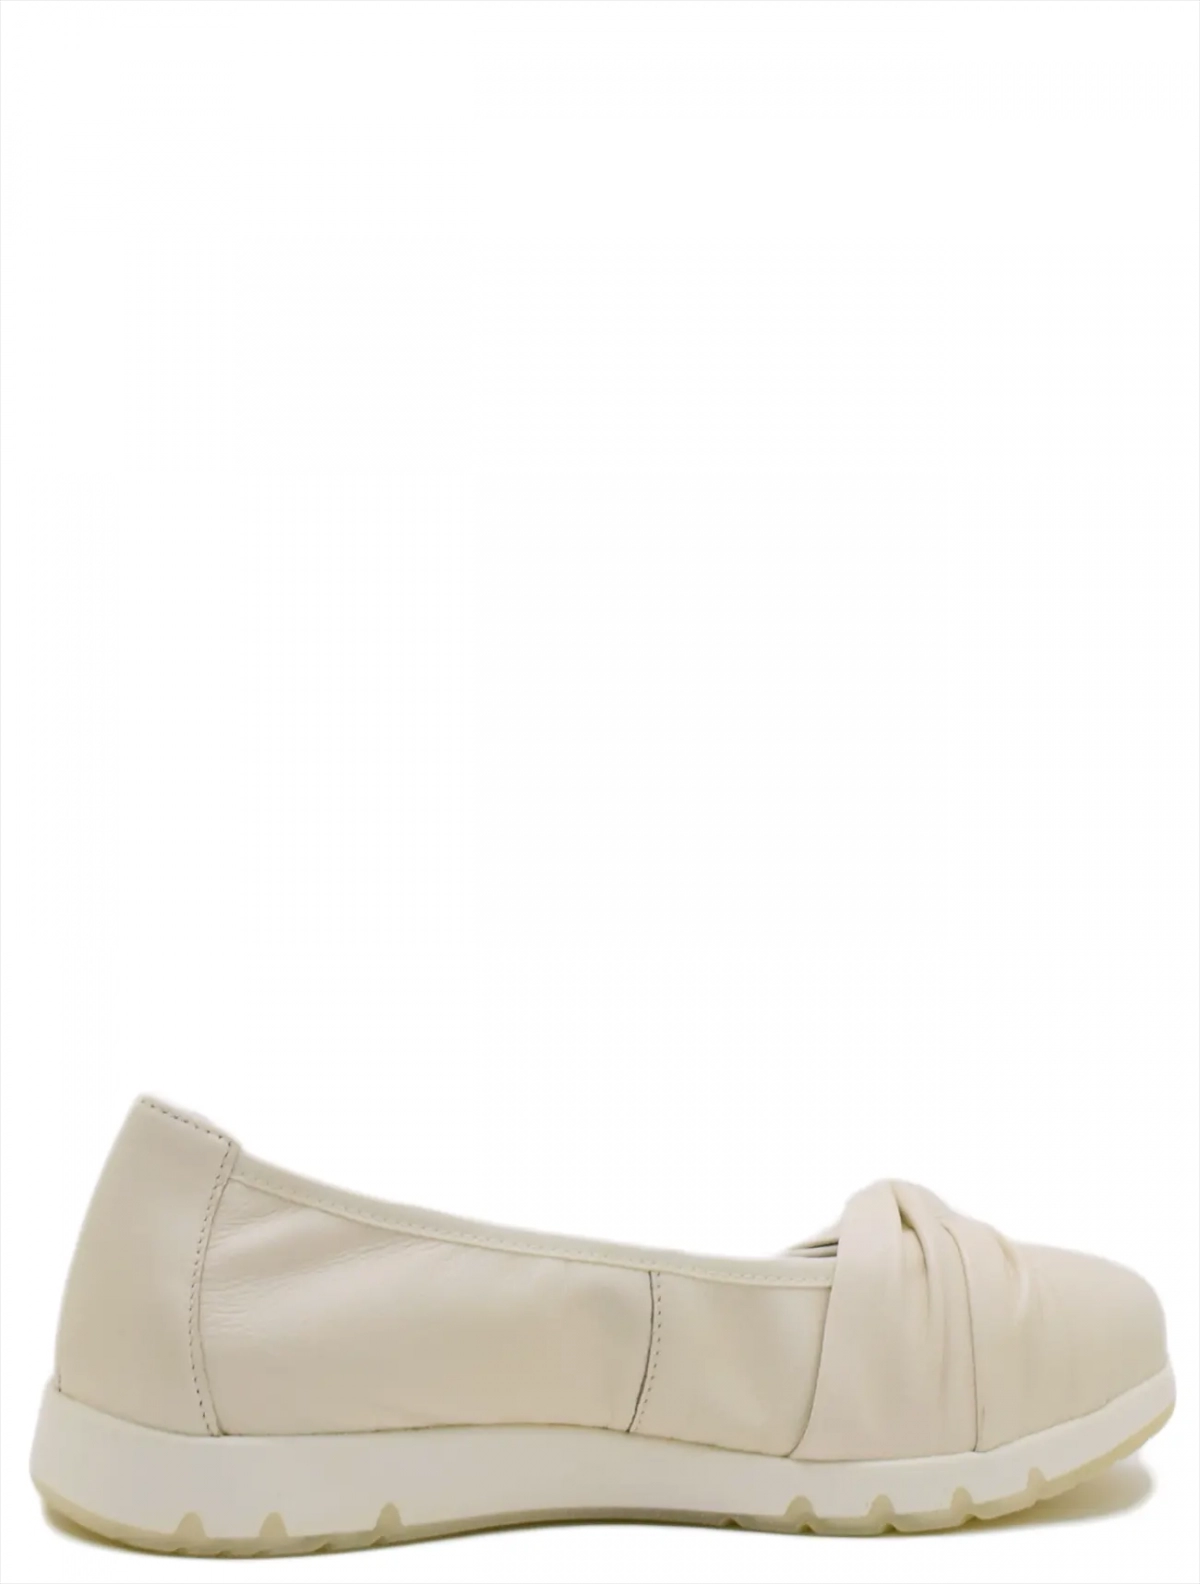 Caprice 9-22163-20-144 женские туфли